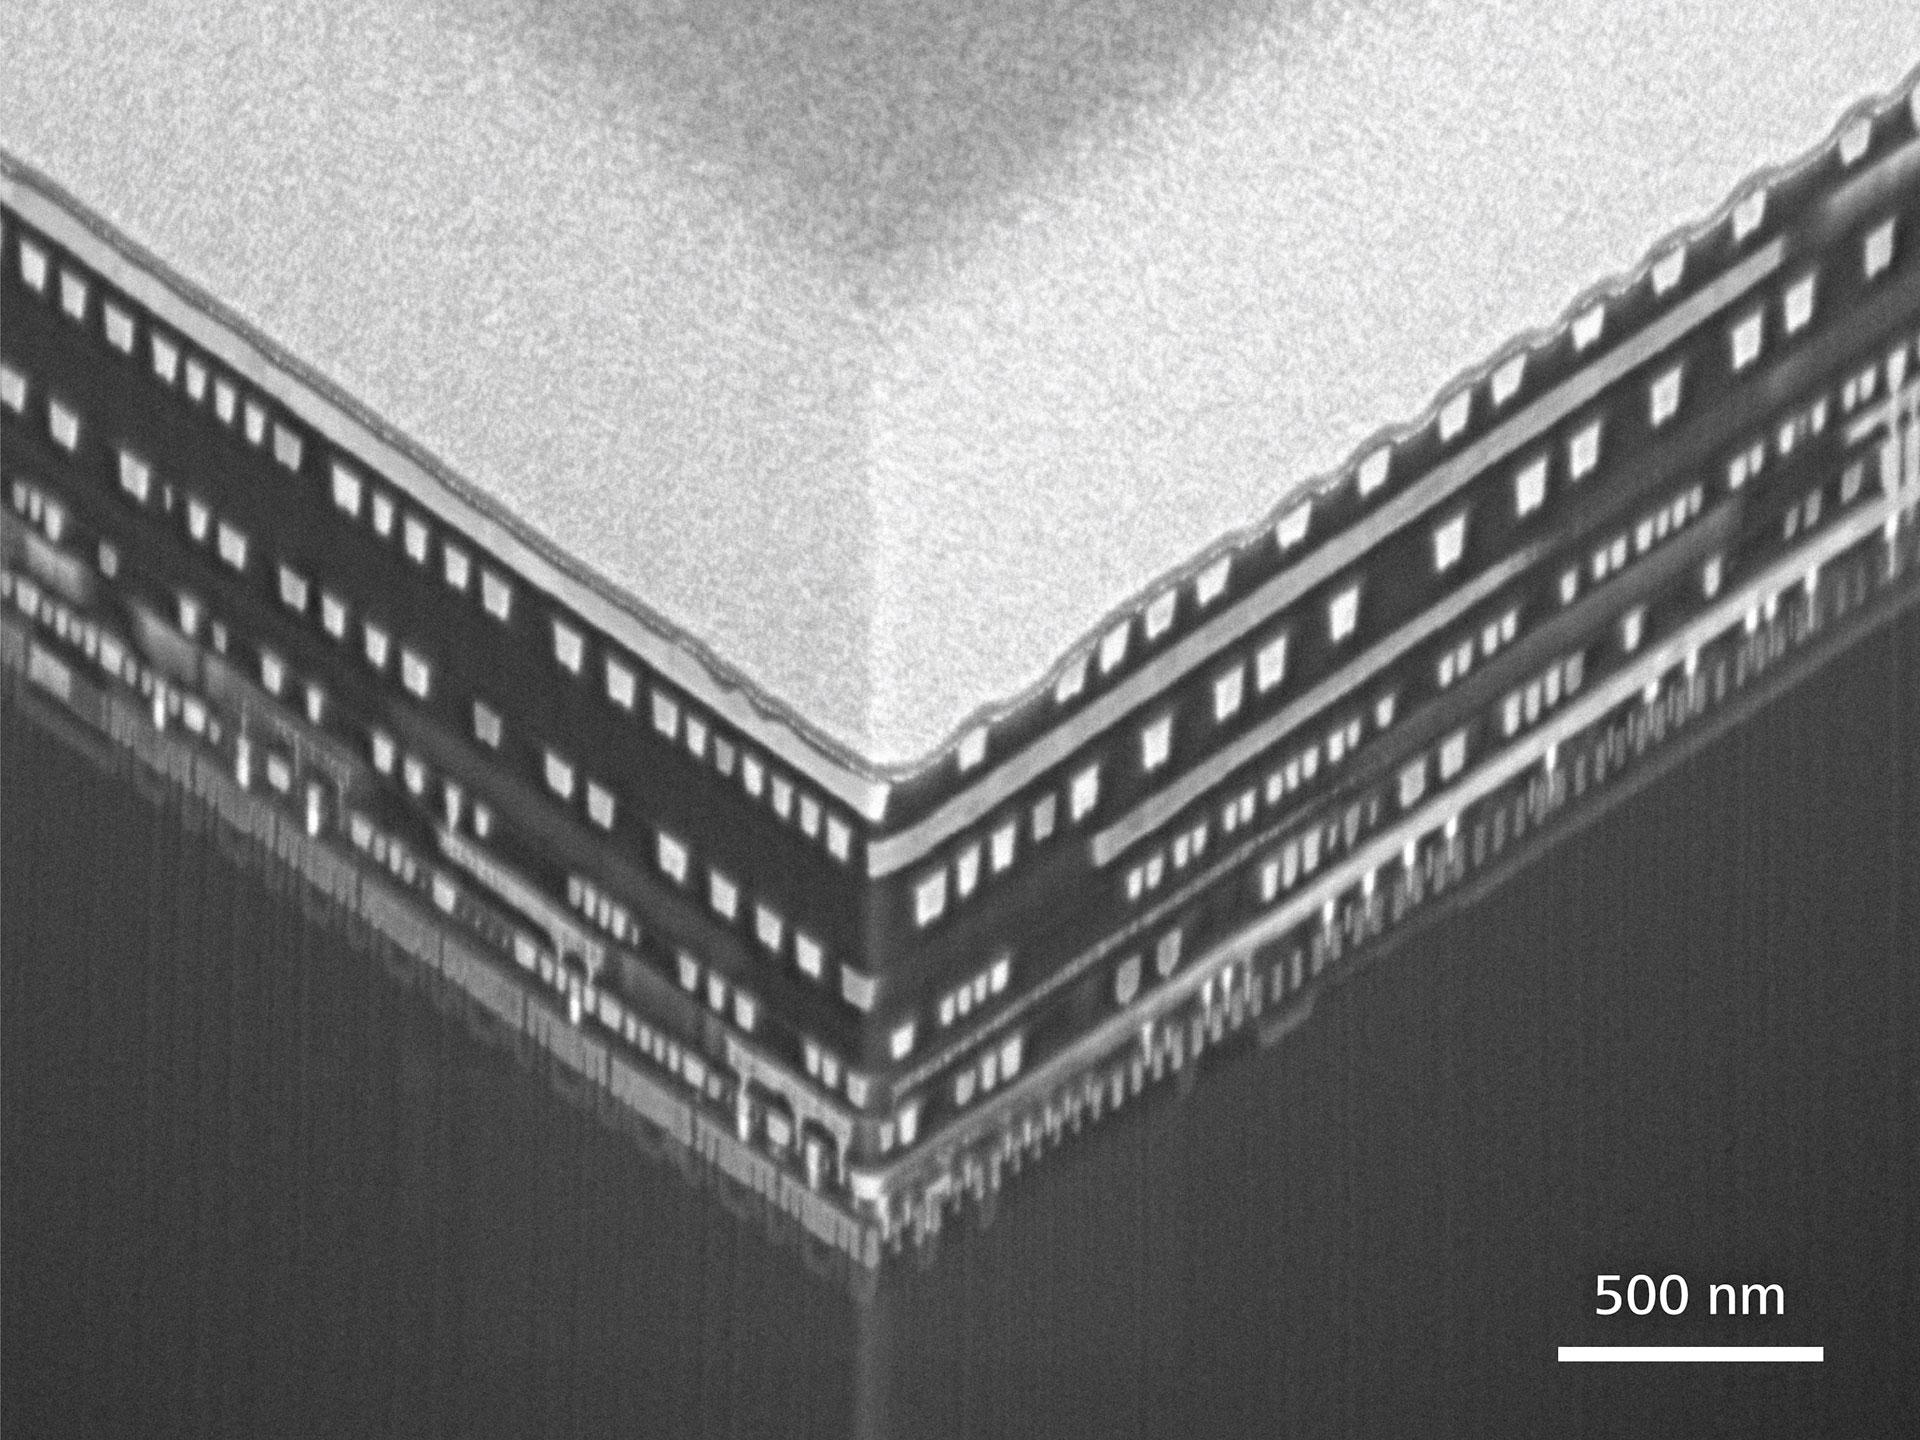 FIB-SEM Cross Section of 7 nm SRAM